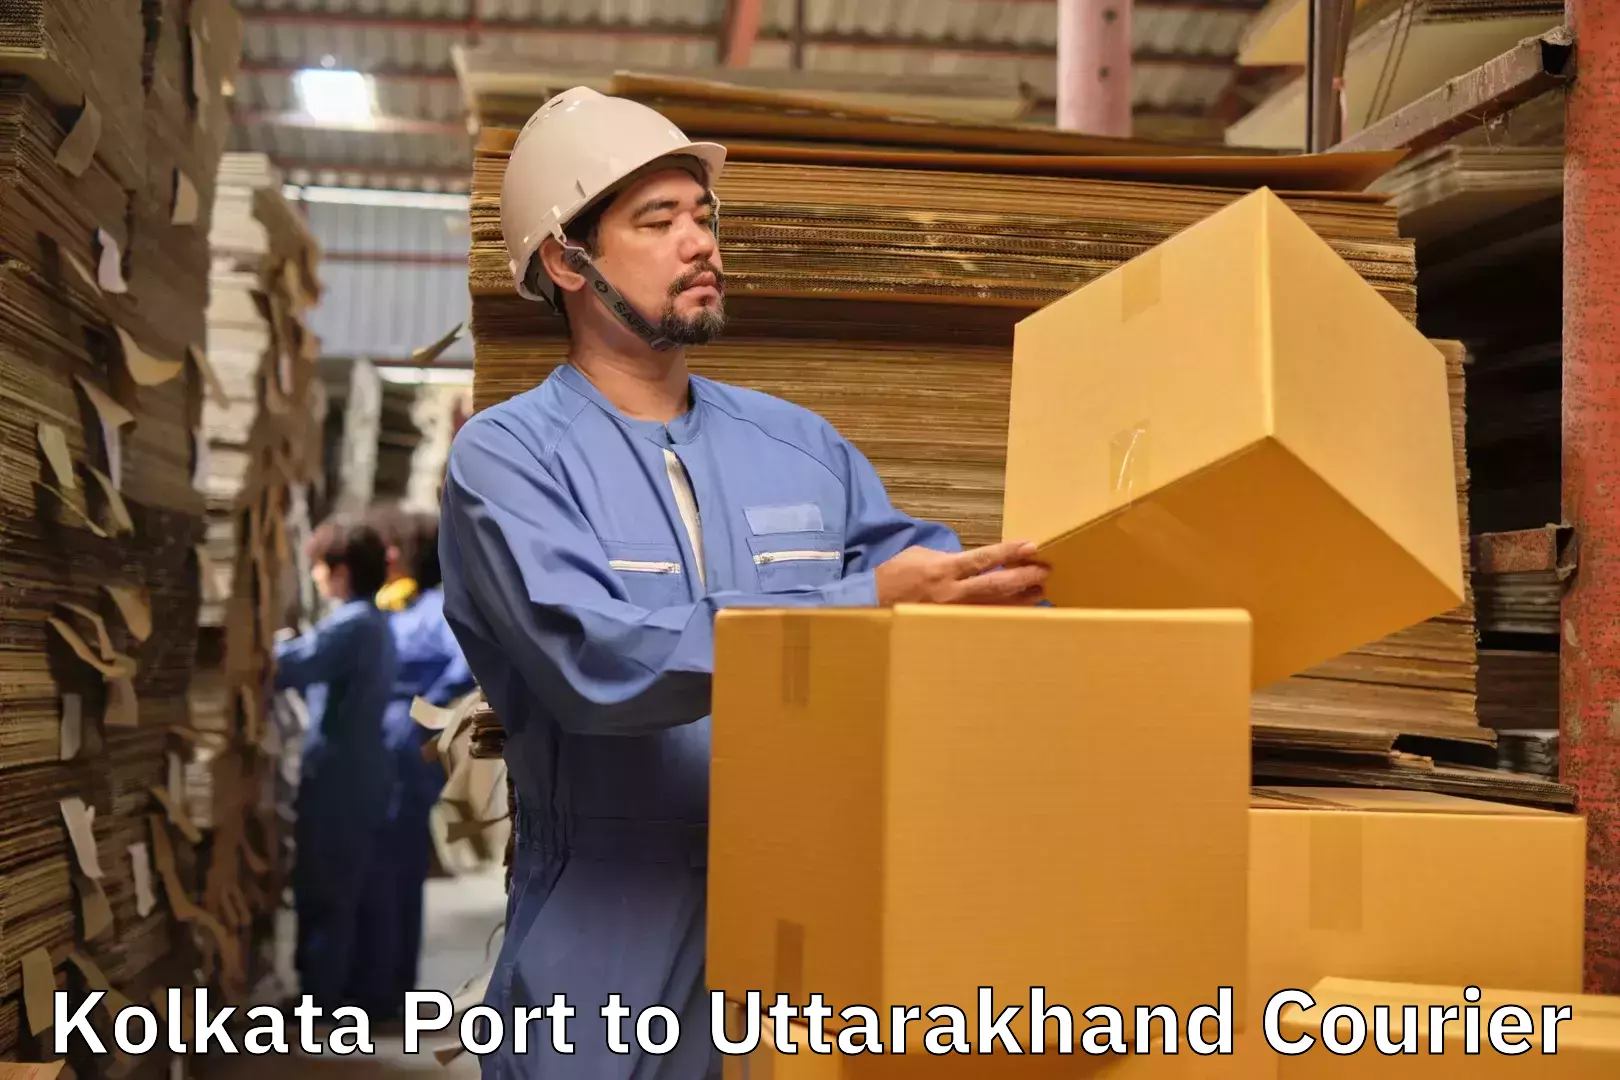 Luggage delivery providers Kolkata Port to Almora